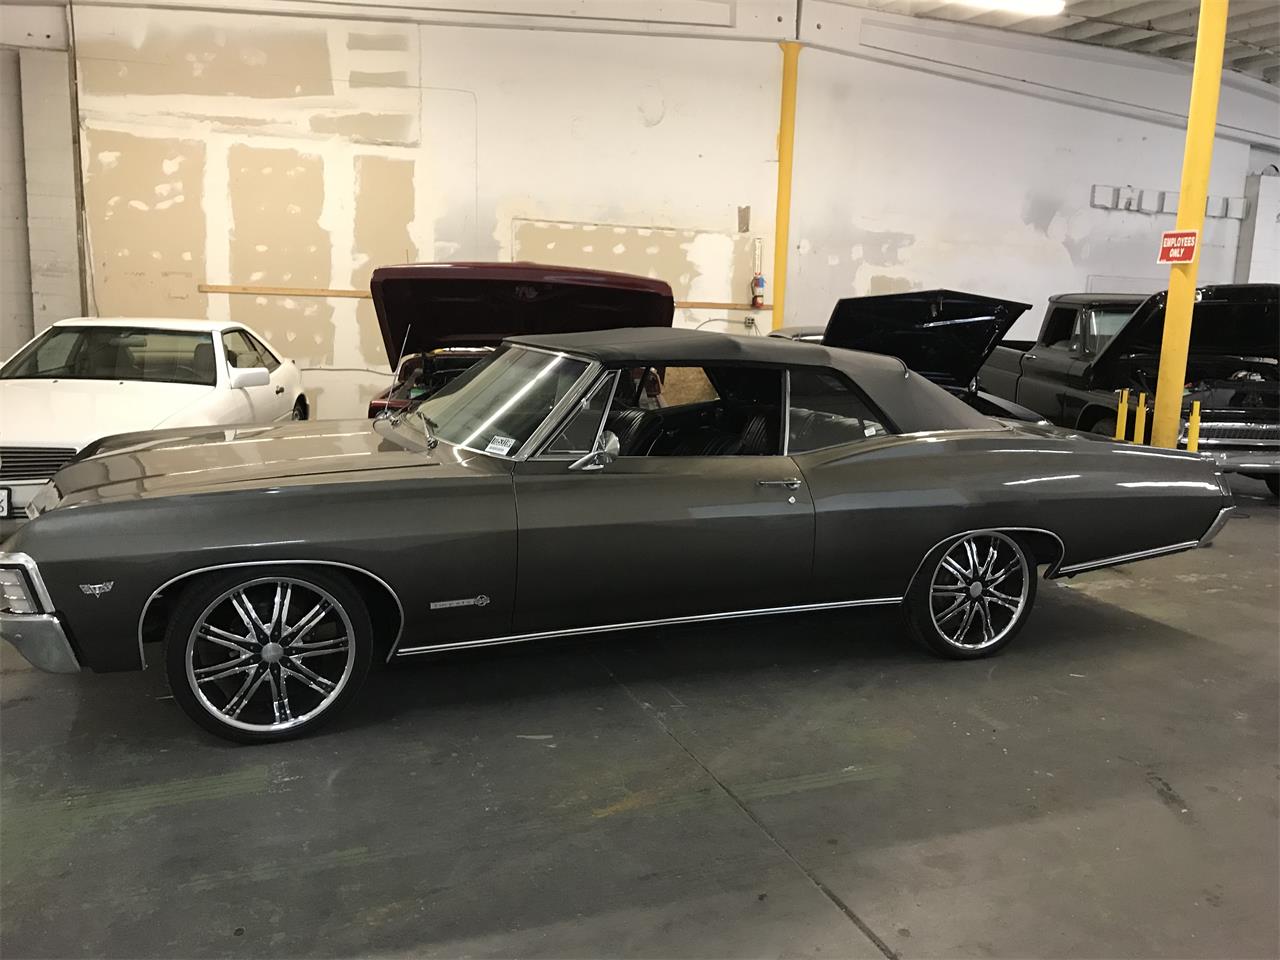 For Sale: 1967 Chevrolet Impala SS in Oceanside, California.